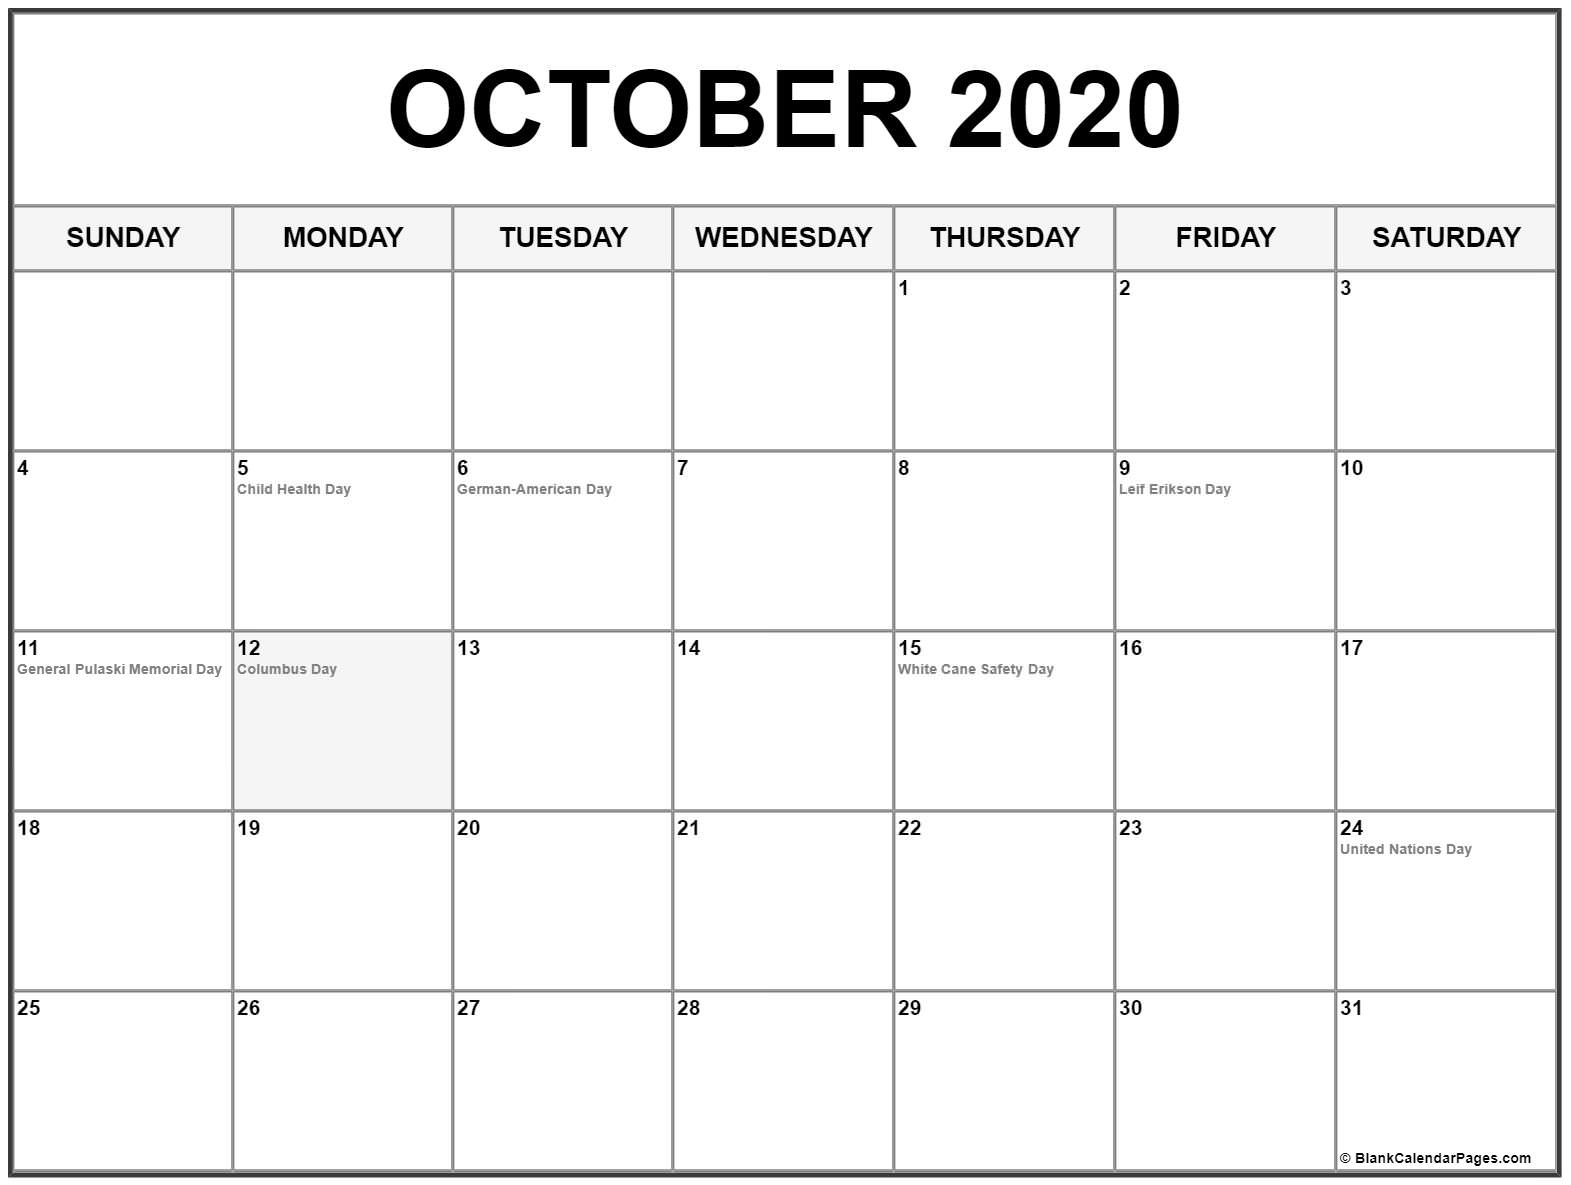 October 2020 Calendar With Holidays